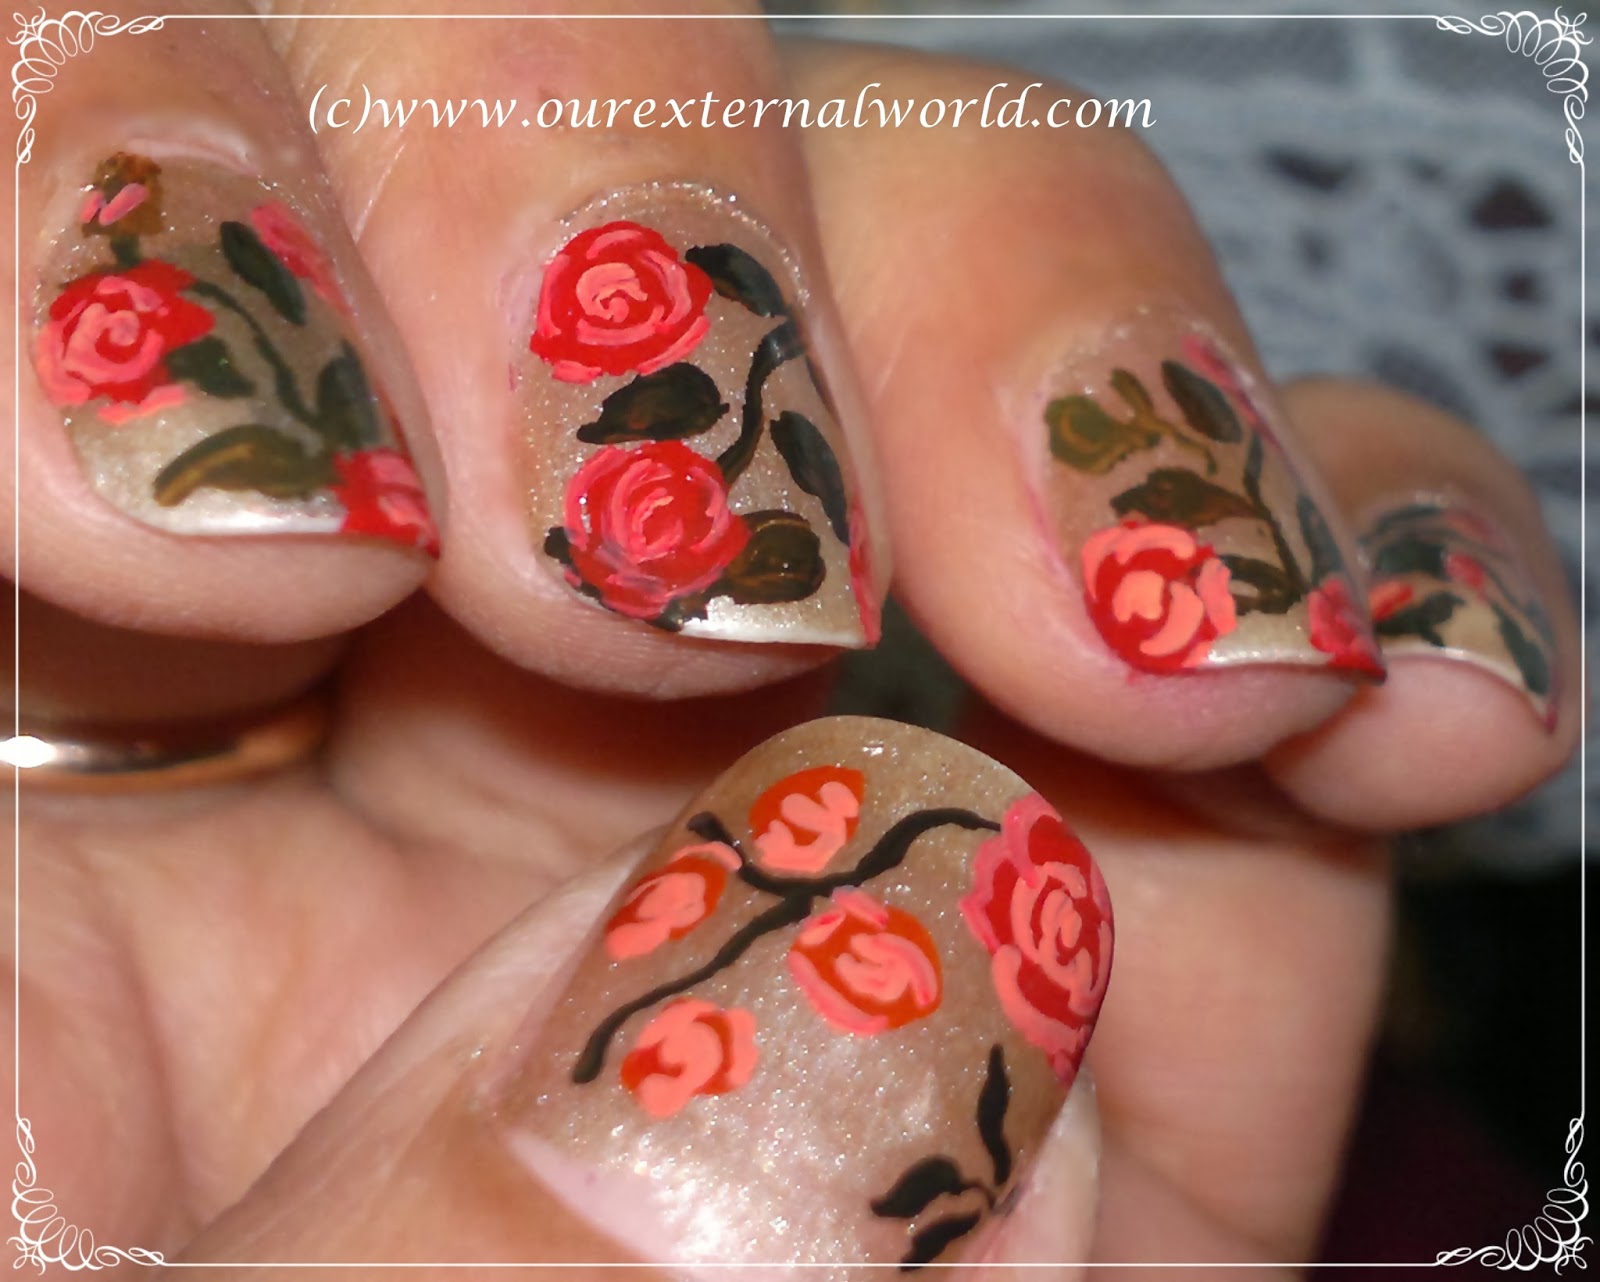 4. "Pinterest Nail Art Tutorial: Rose Design" - wide 4